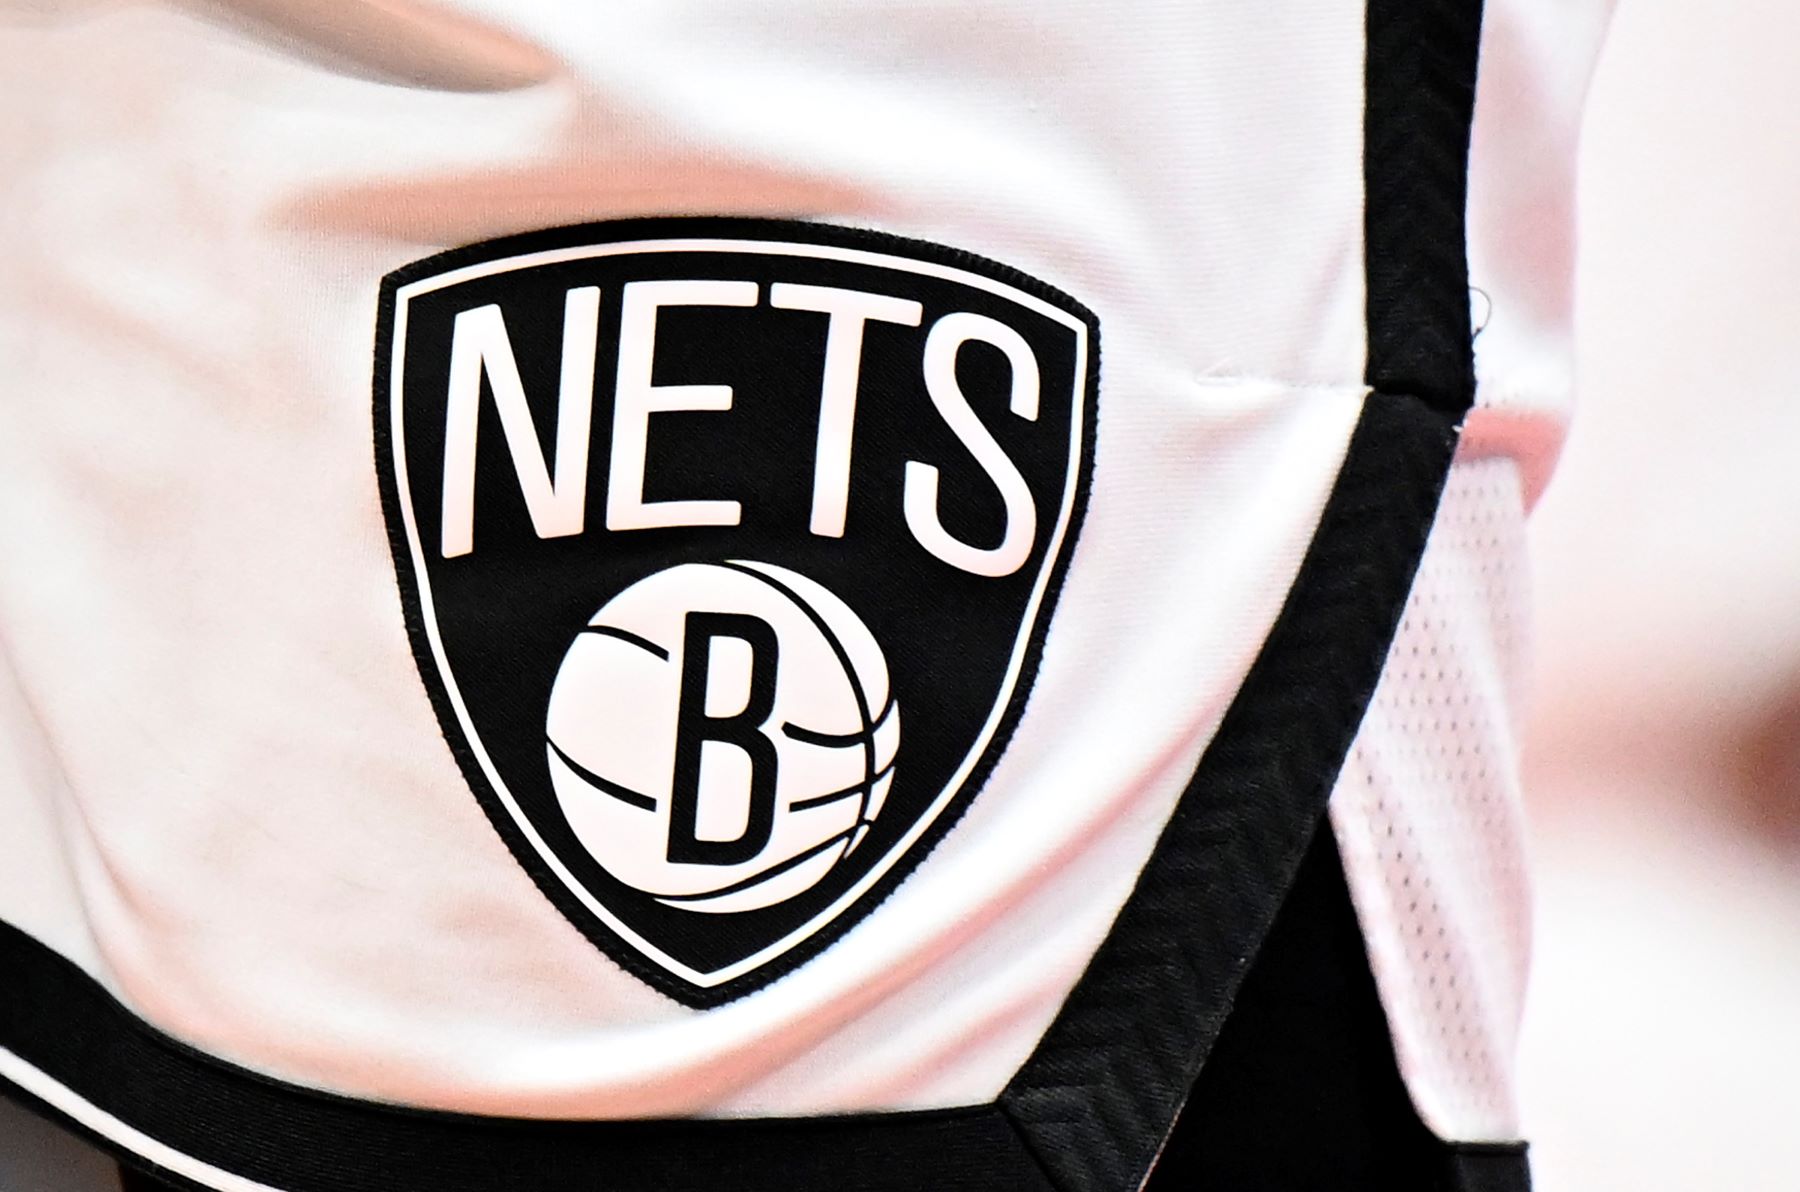 NBA team Brooklyn Nets logo on uniform shorts during a game against the Washington Wizards